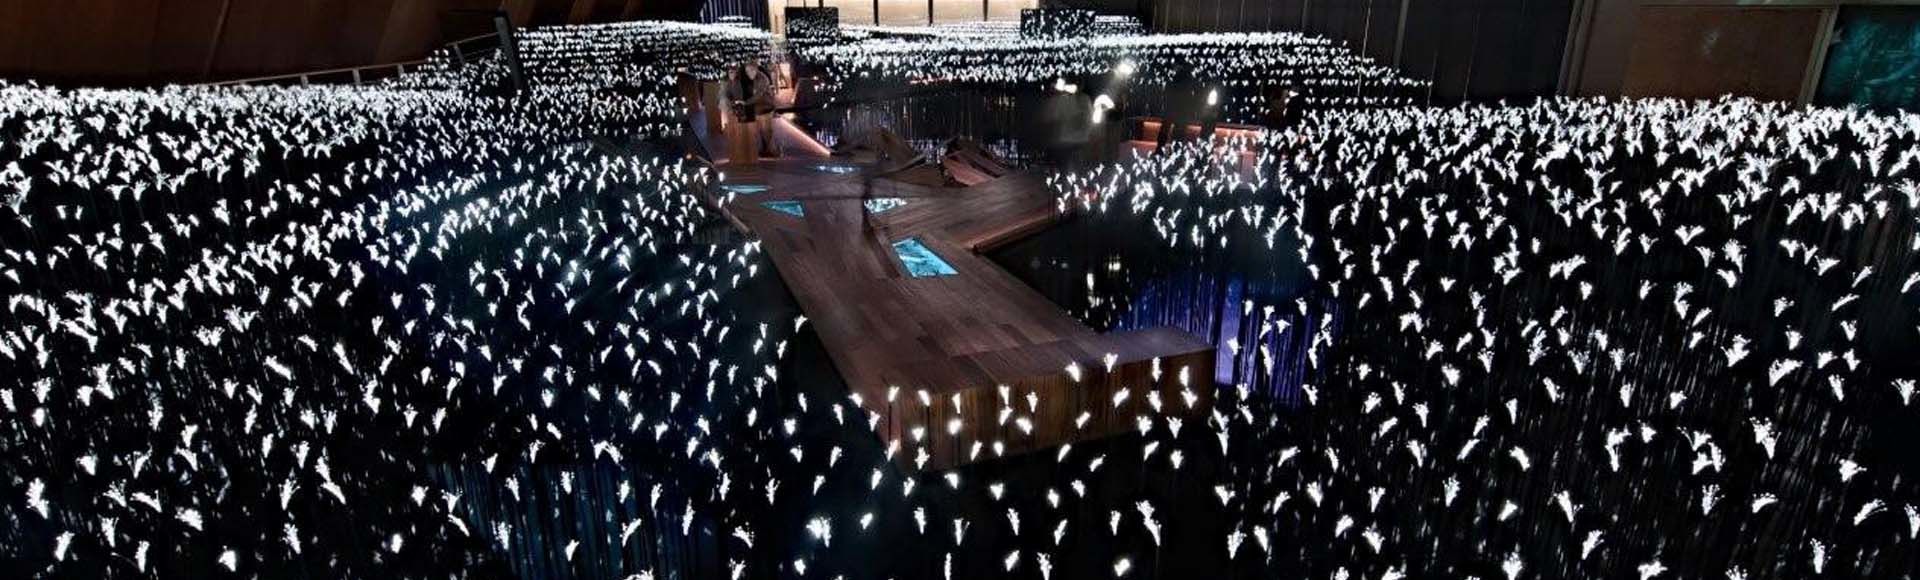 illuminated swimming pool fiber-optical designs in dubai